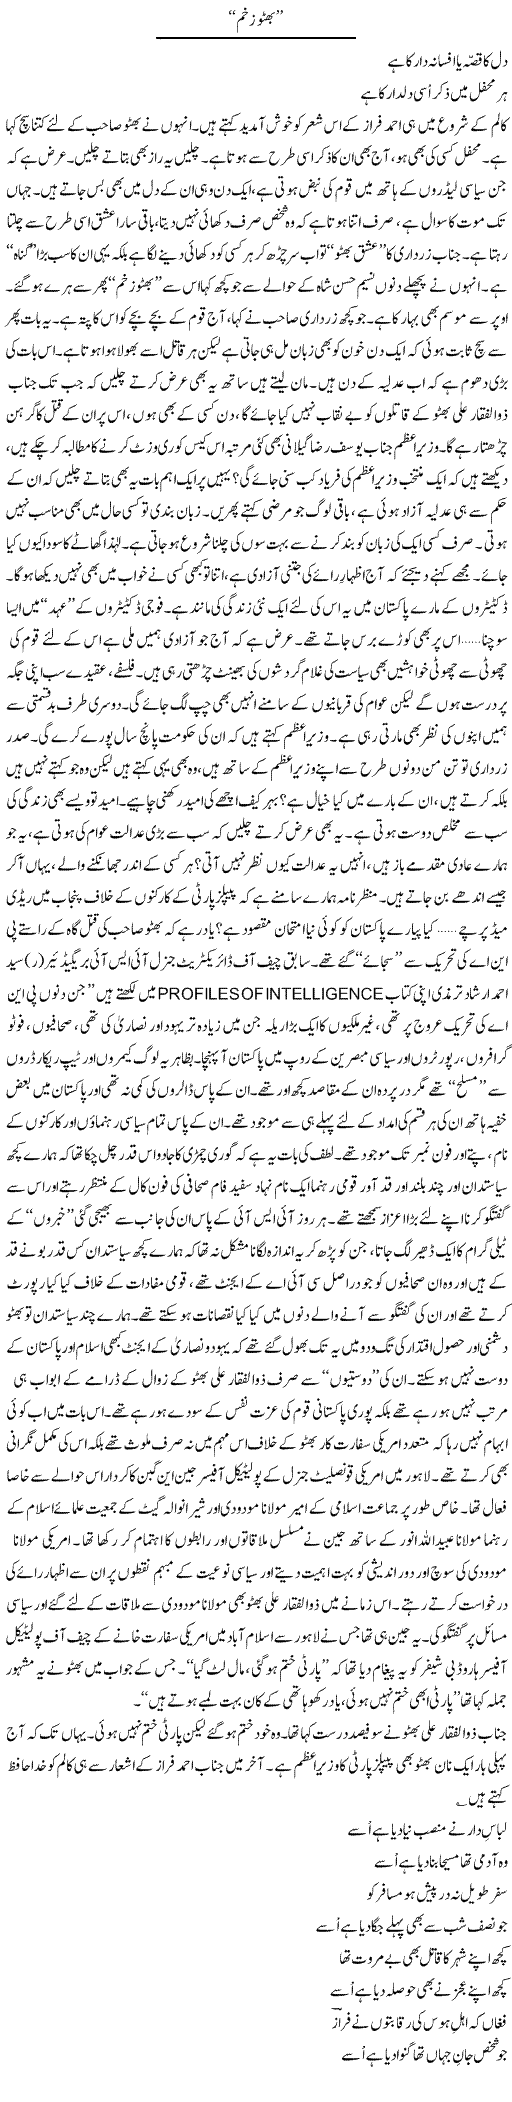 Bhutto Zakaham Express Column Ijaz Hafeez 8 March 2010